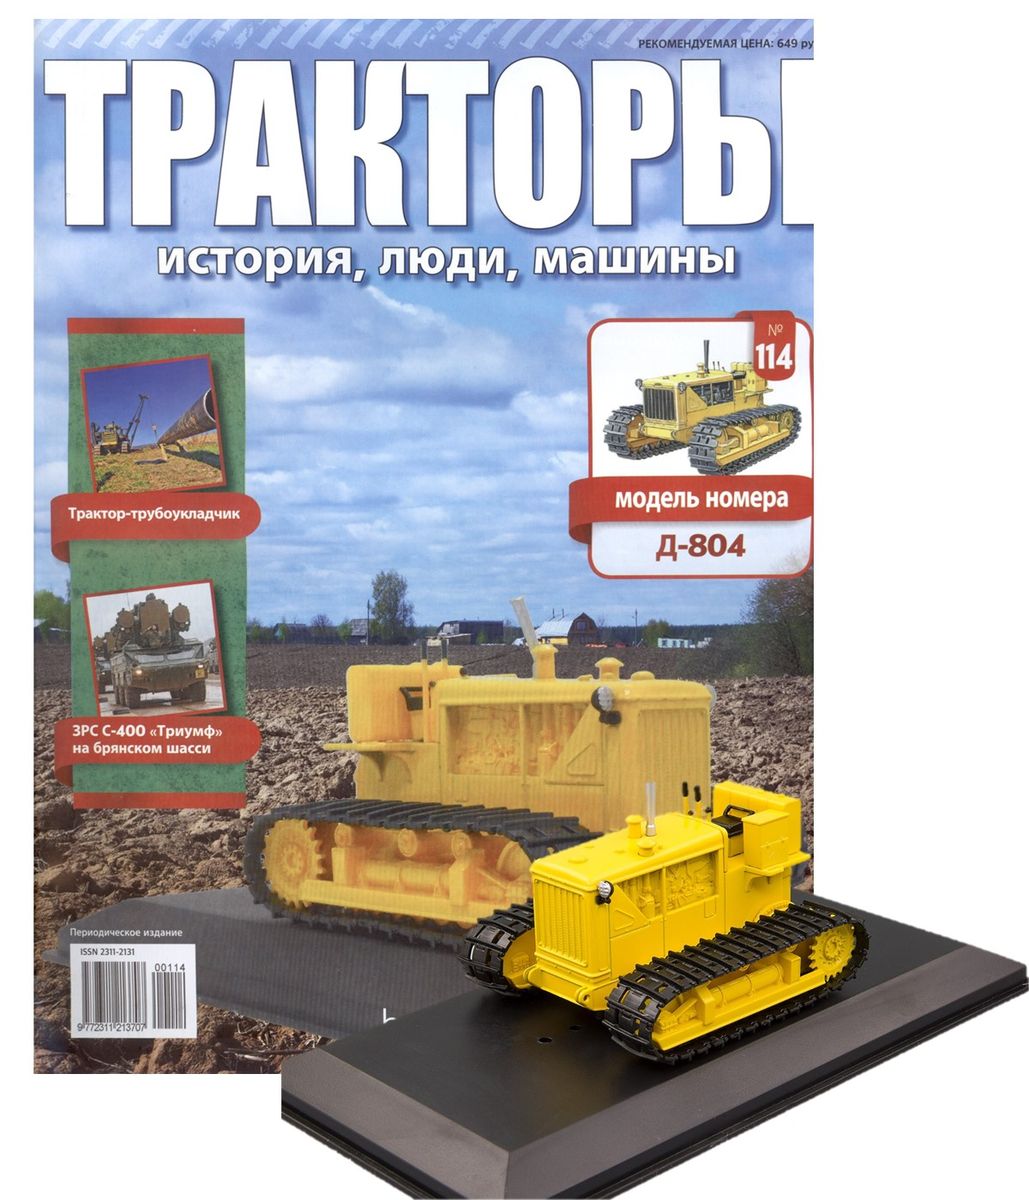 Журнал Тракторы №114. Трактор Д-804